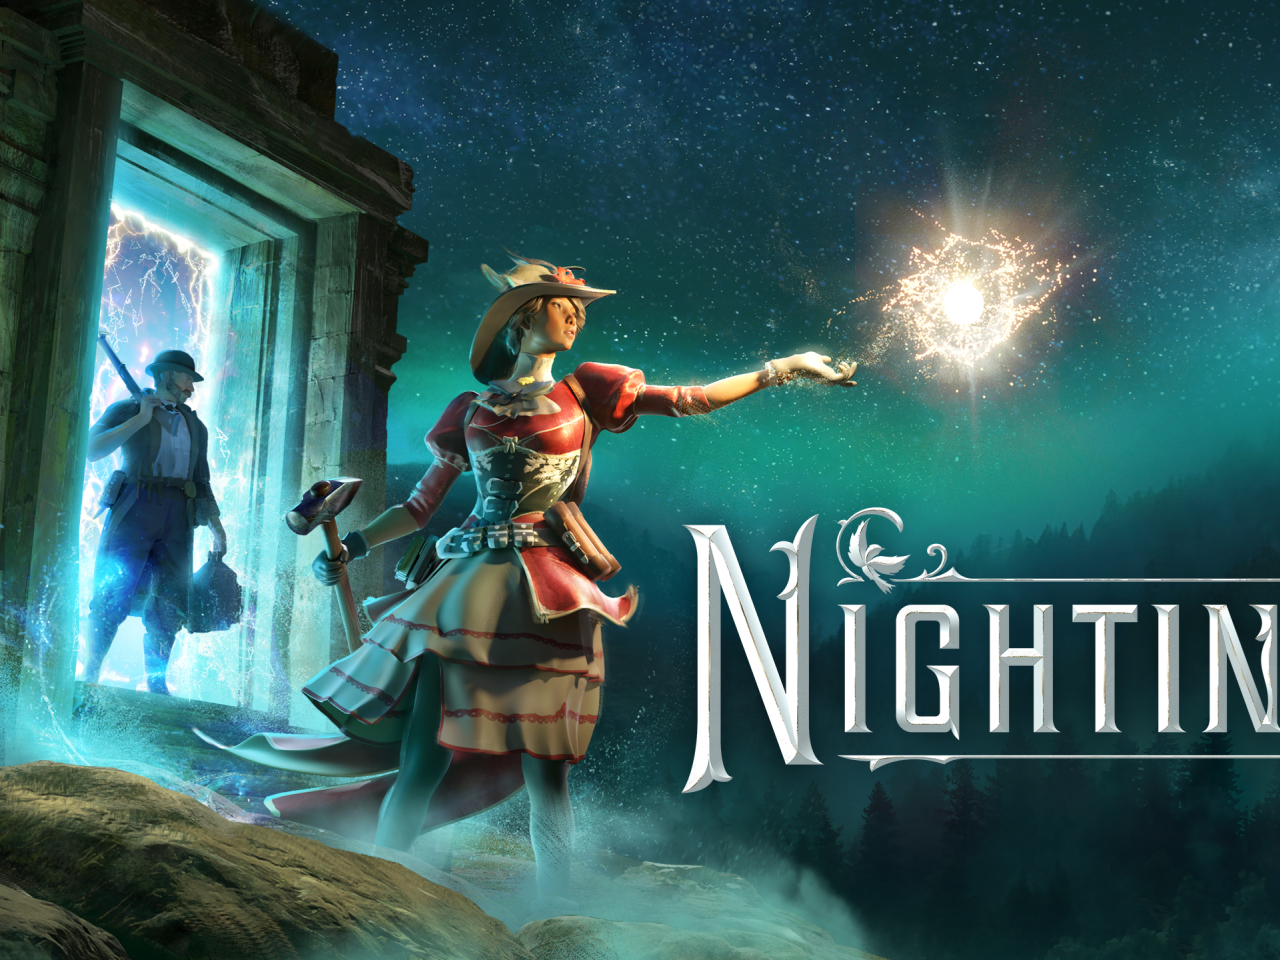 Nightingale игра купить. Nightingale игра. Nightingale Reveal игра. Nightingale Gameplay. Nightingale игра торговля картинки.